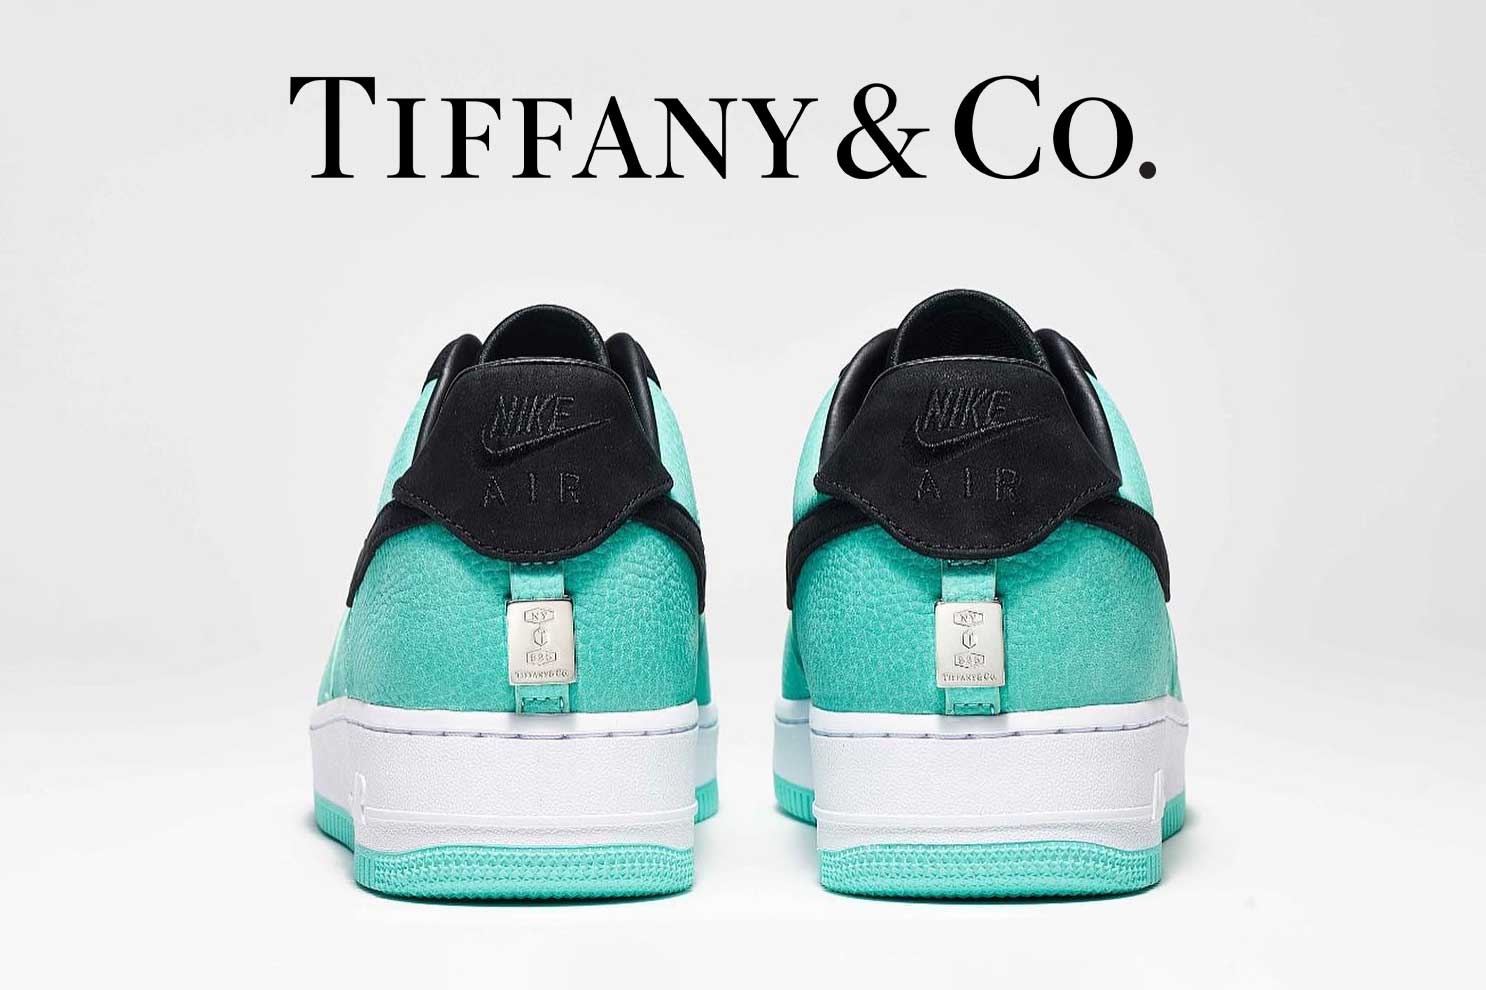 Tiffany & CO. NIKE shoes {WANT!}.  Tiffany & co., Tiffany blue, Nike